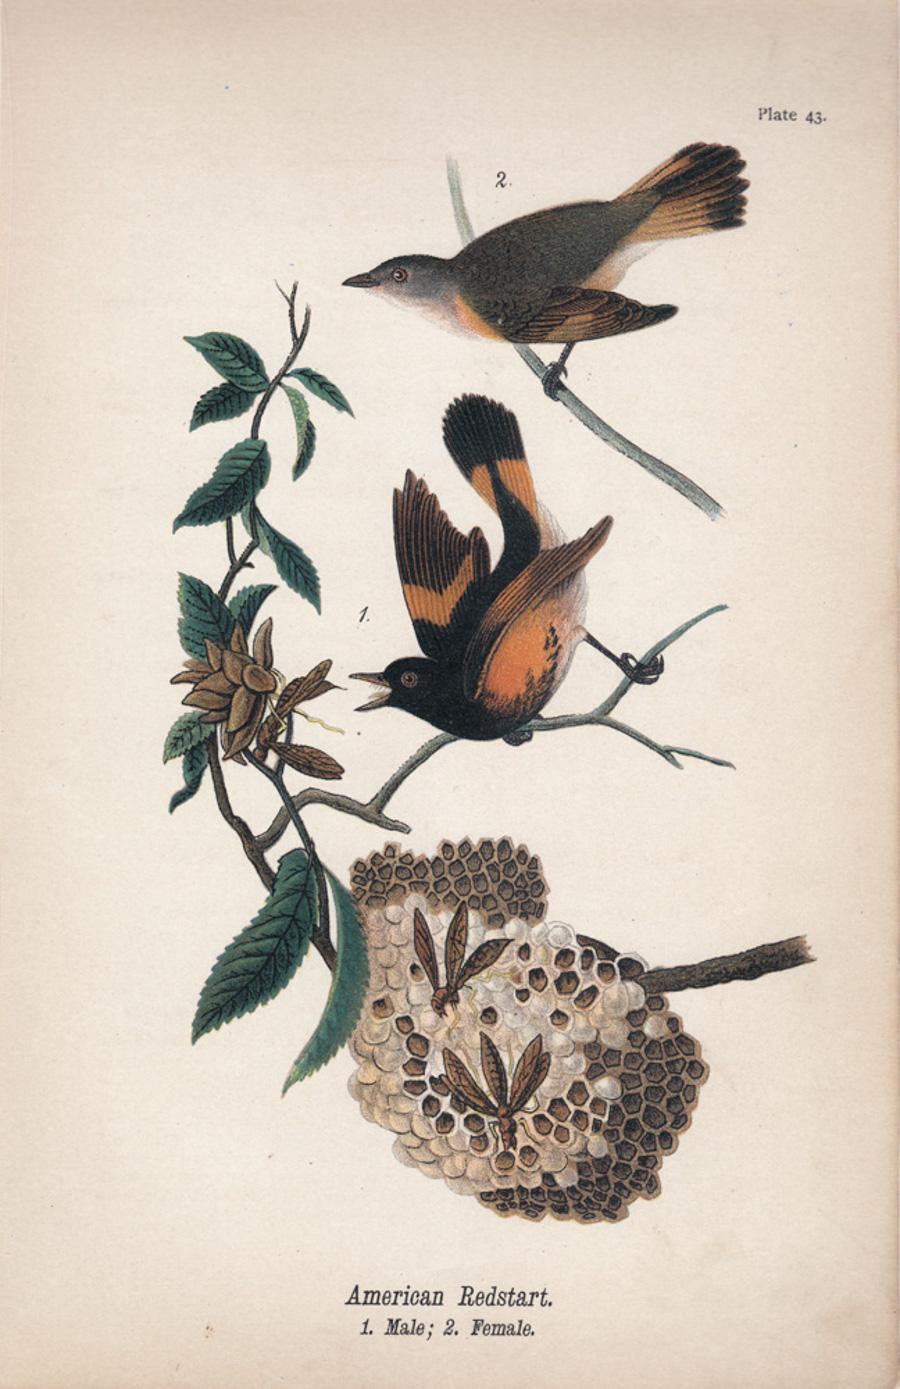 After John James Audubon Animal Print - American Redstart; Plate 43